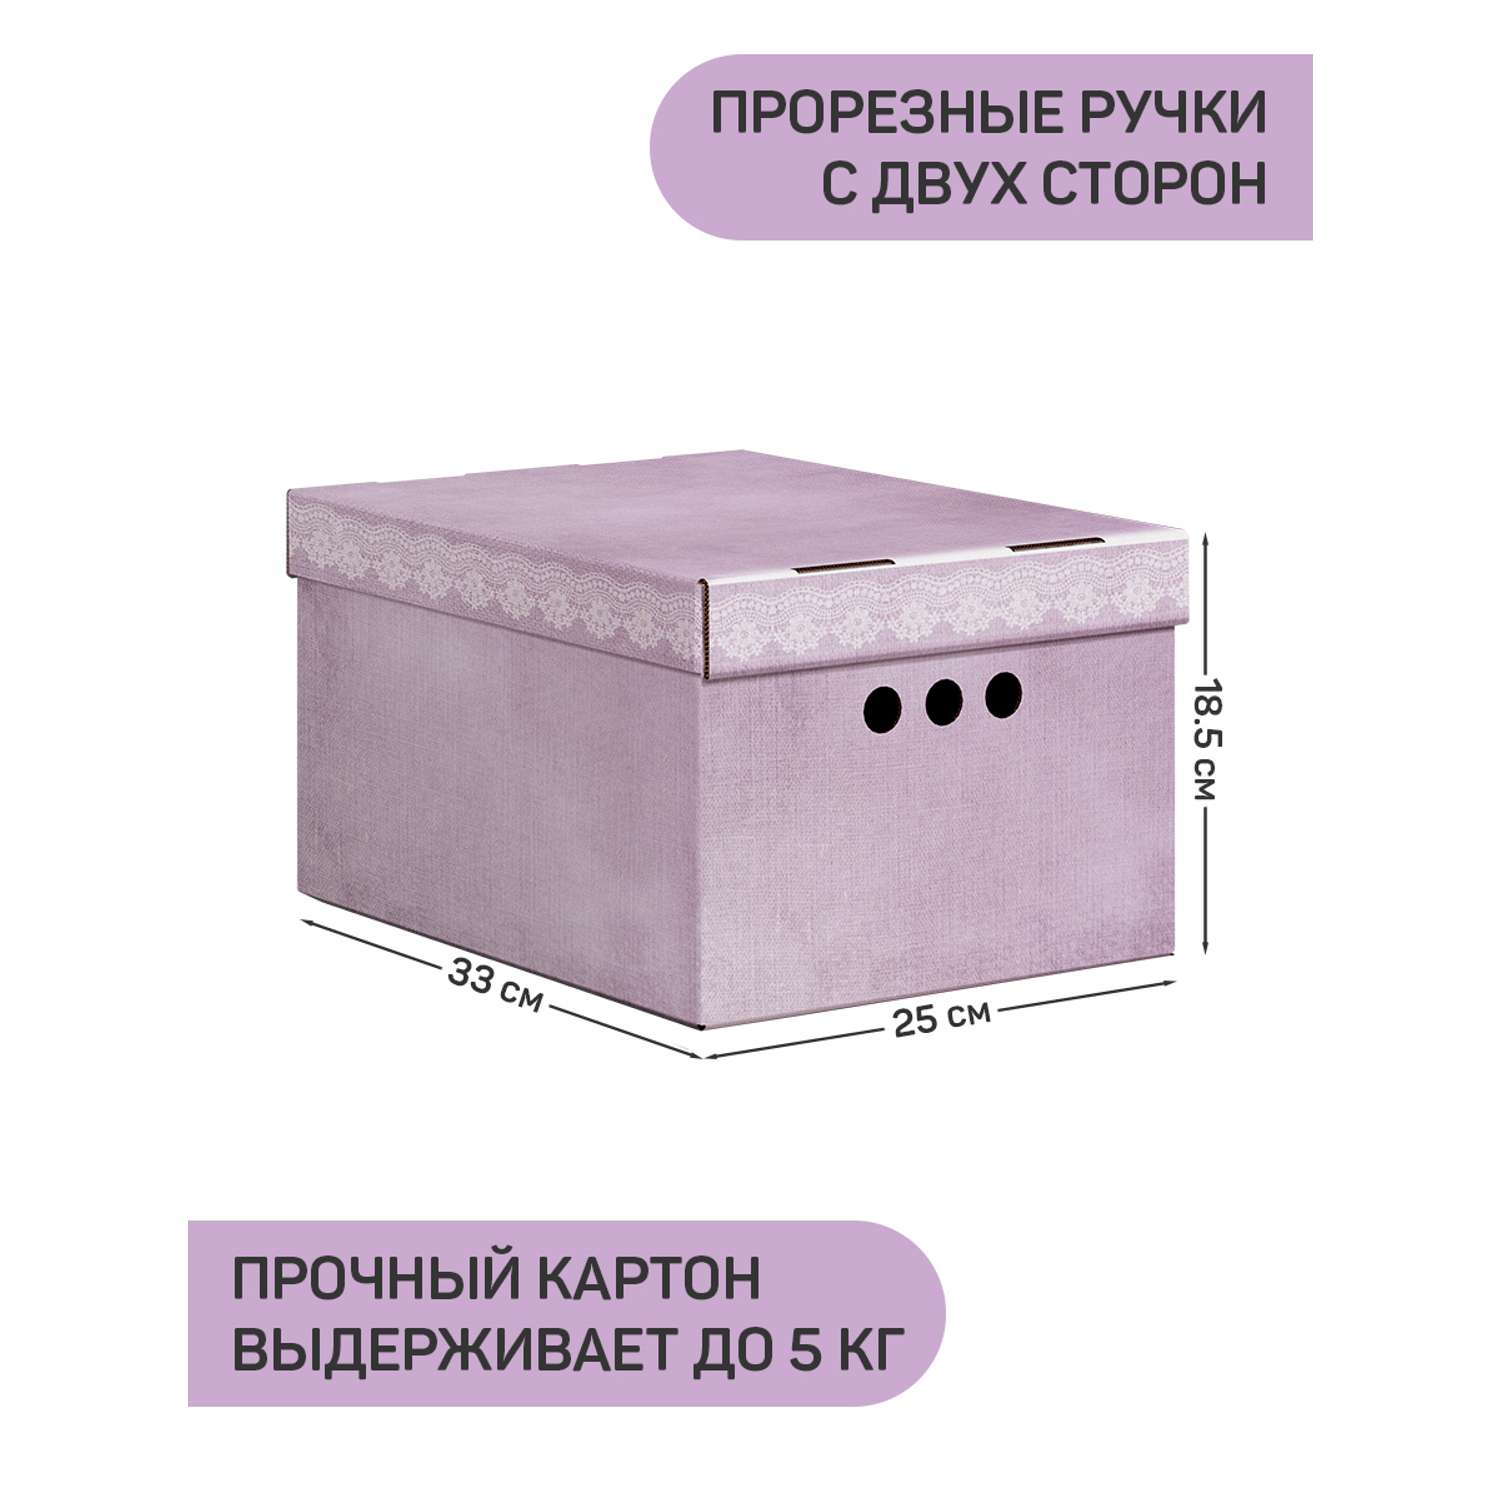 Коробка для хранения VALIANT 25*33*18.5 см набор 4 шт. - фото 2